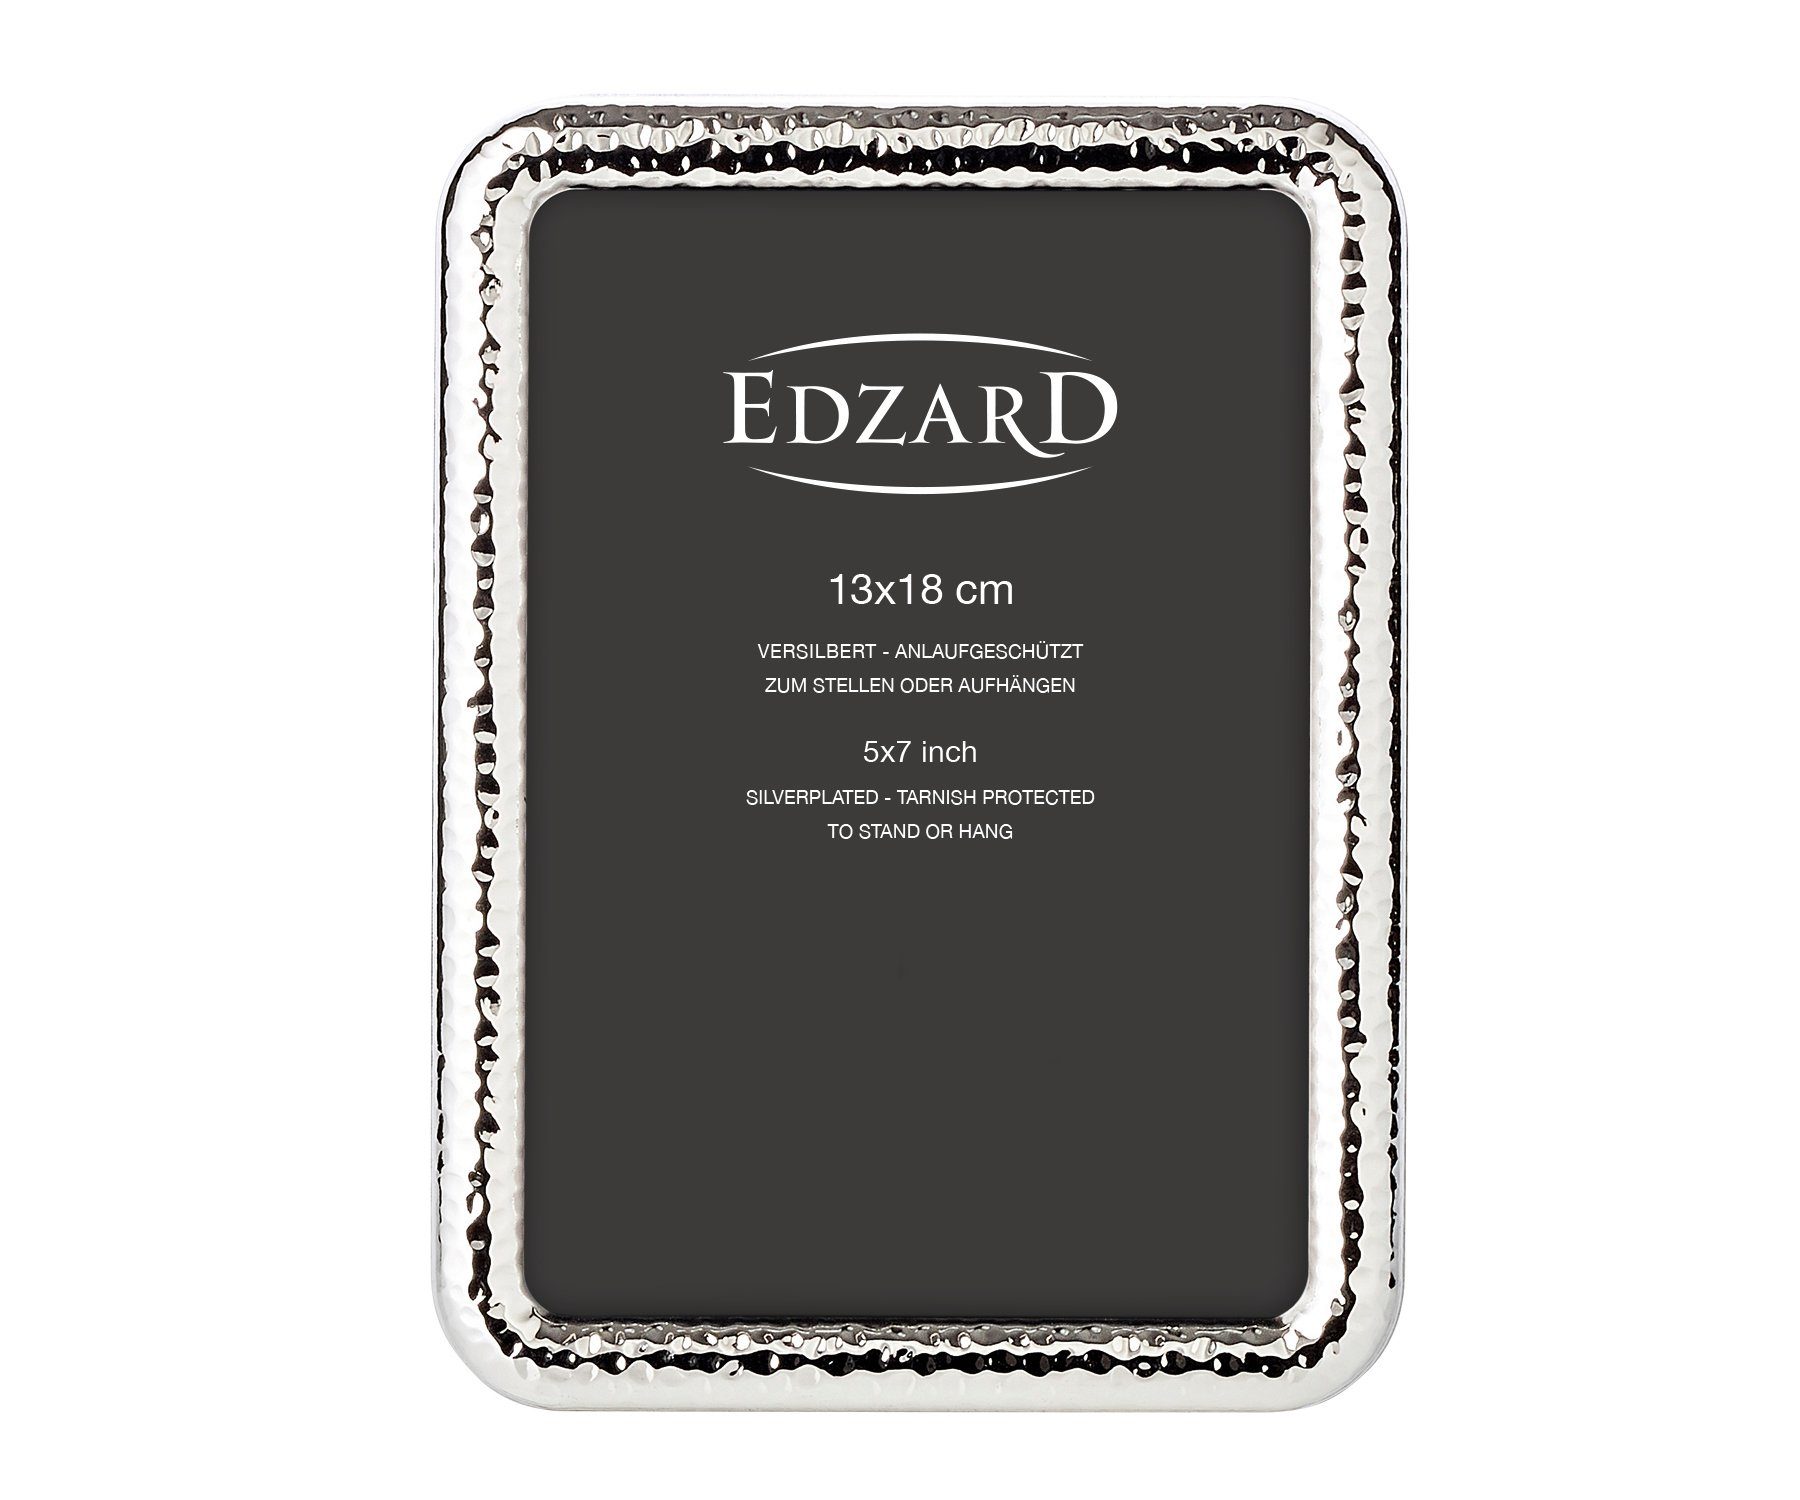 EDZARD Bilderrahmen Amalfi, Foto, edel 13x18 cm versilbert, anlaufgeschützt für